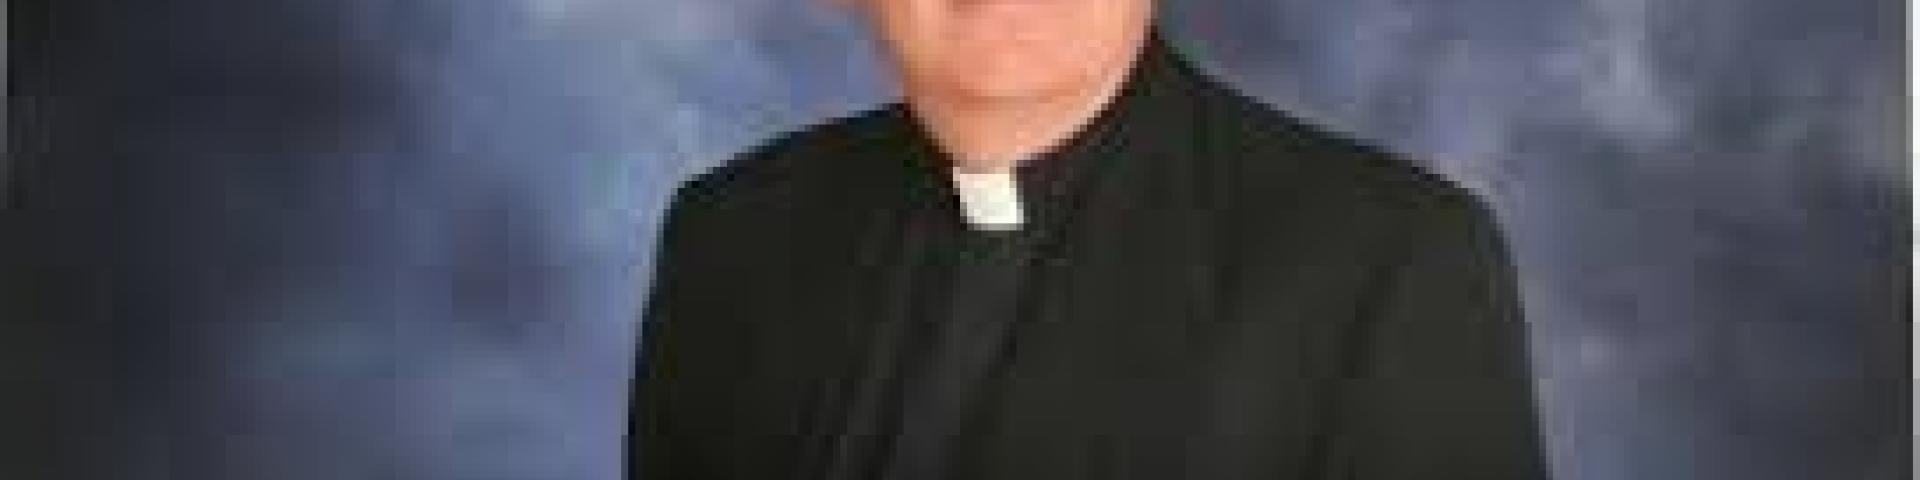 Father Mark Nolette